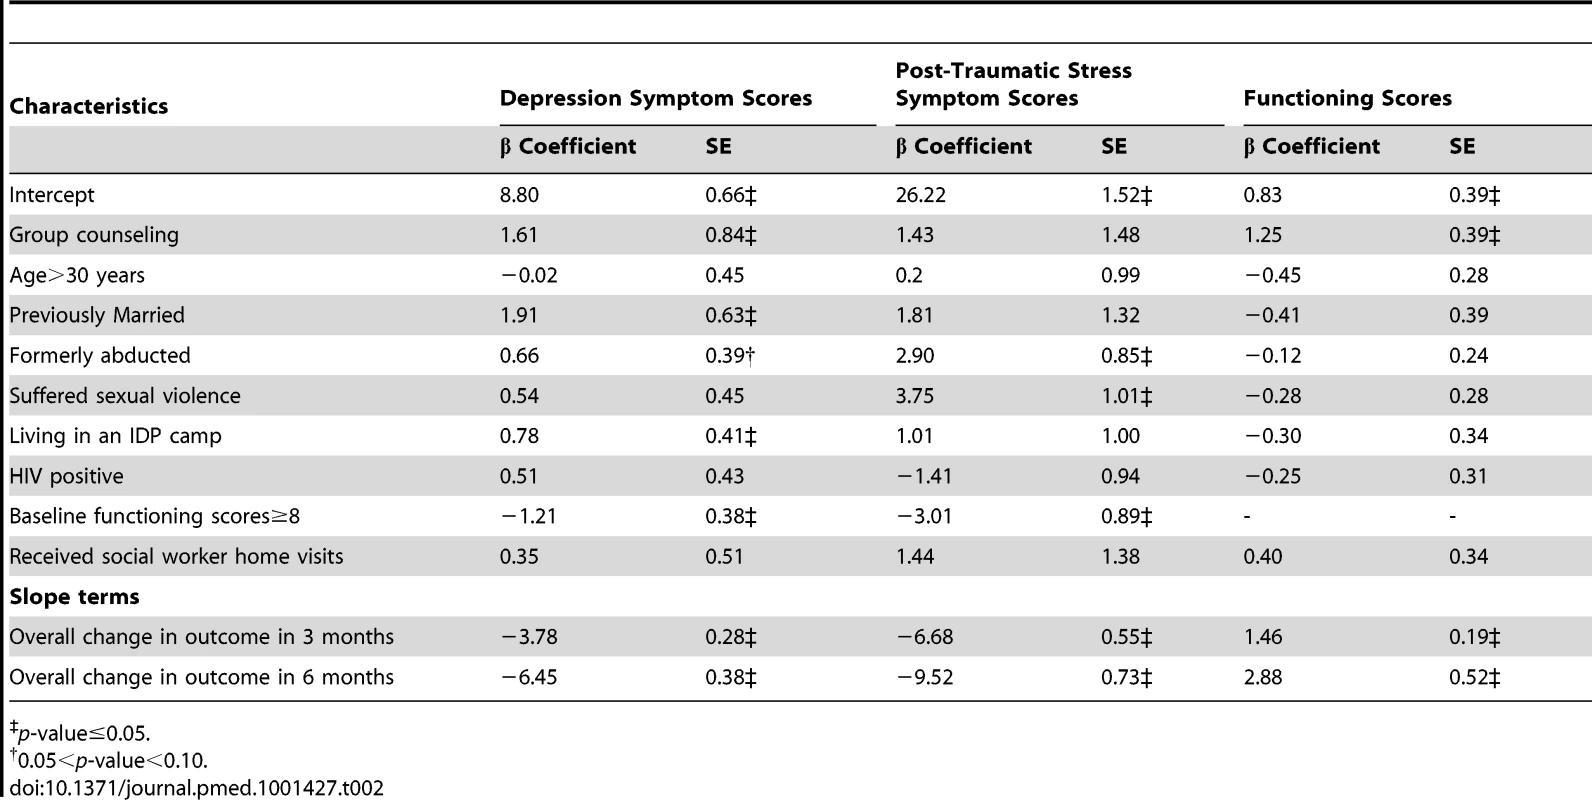 Longitudinal analysis of depression symptom scores, post-traumatic stress symptom scores and functioning scores over time (N = 375).